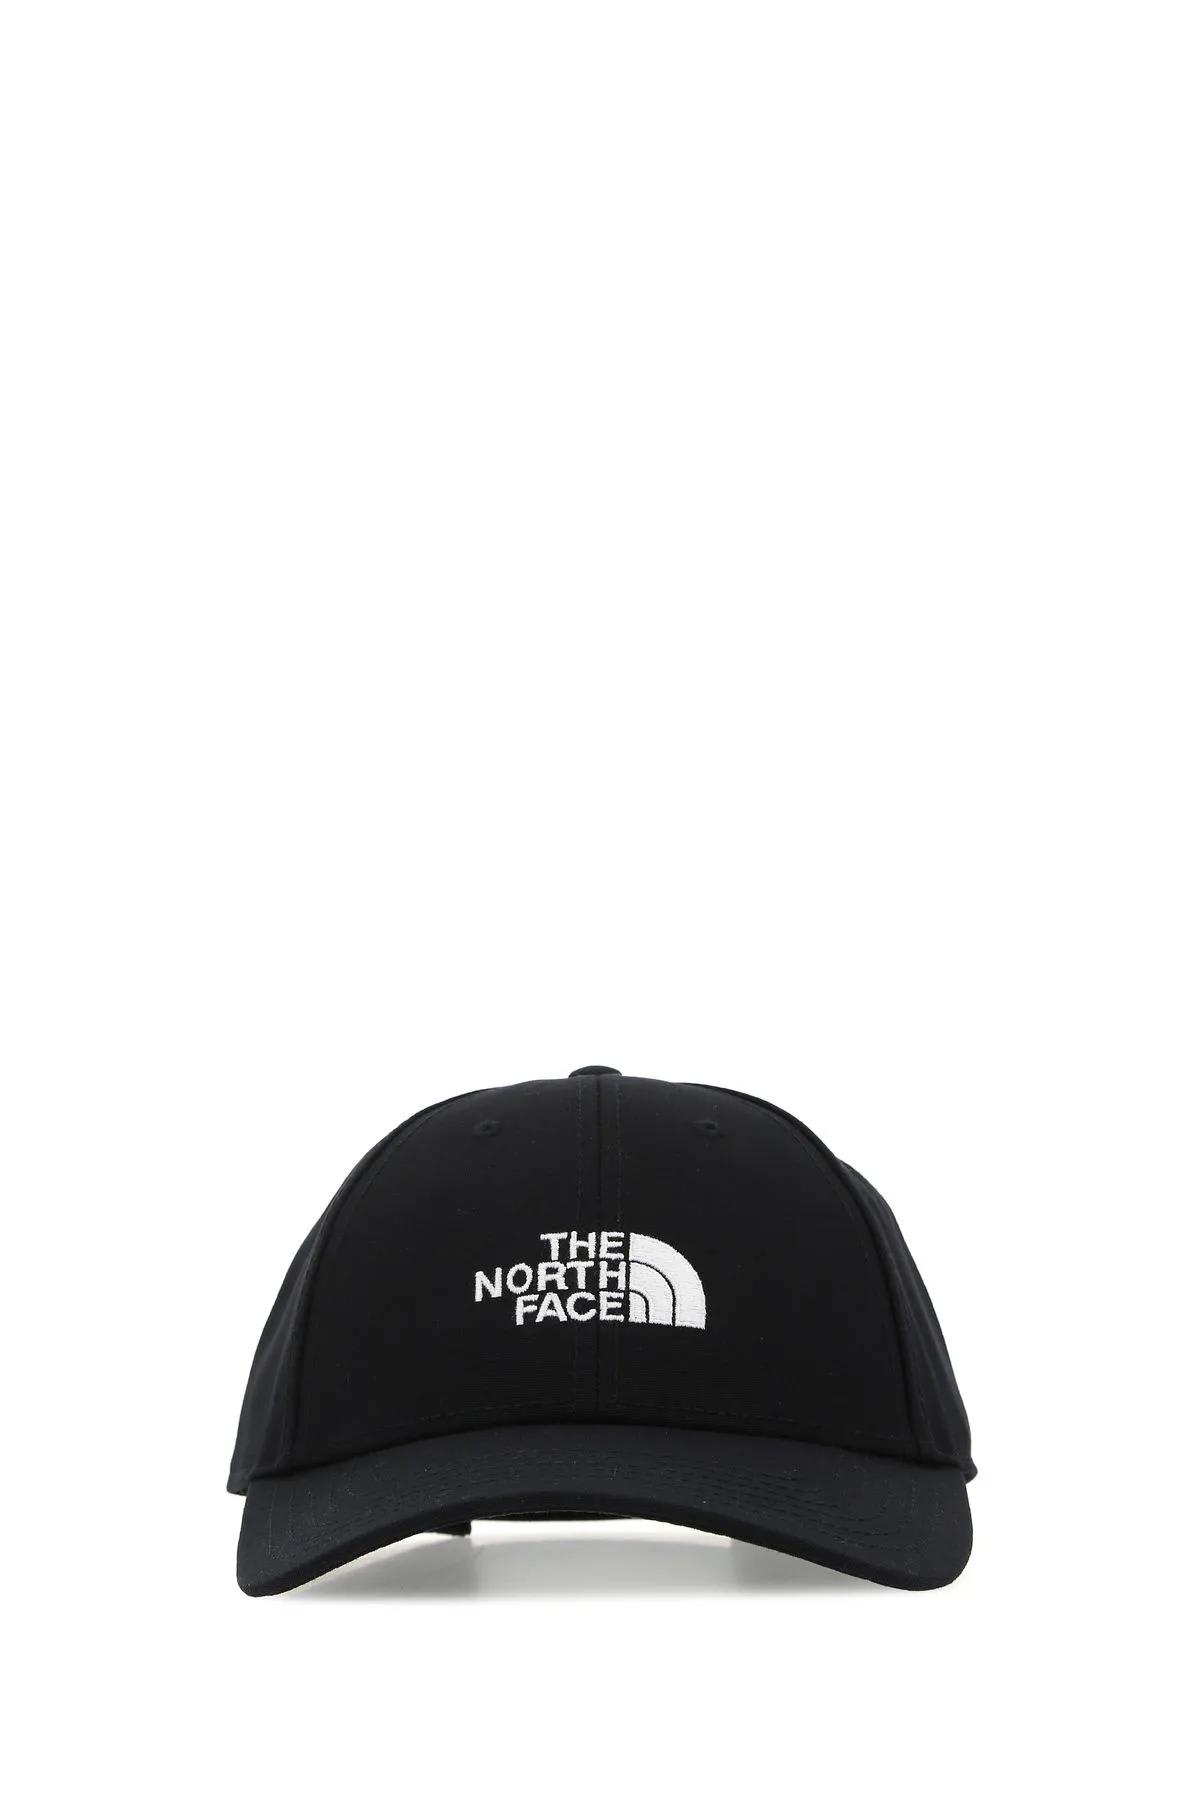 Shop The North Face Black Polyester Baseball Cap